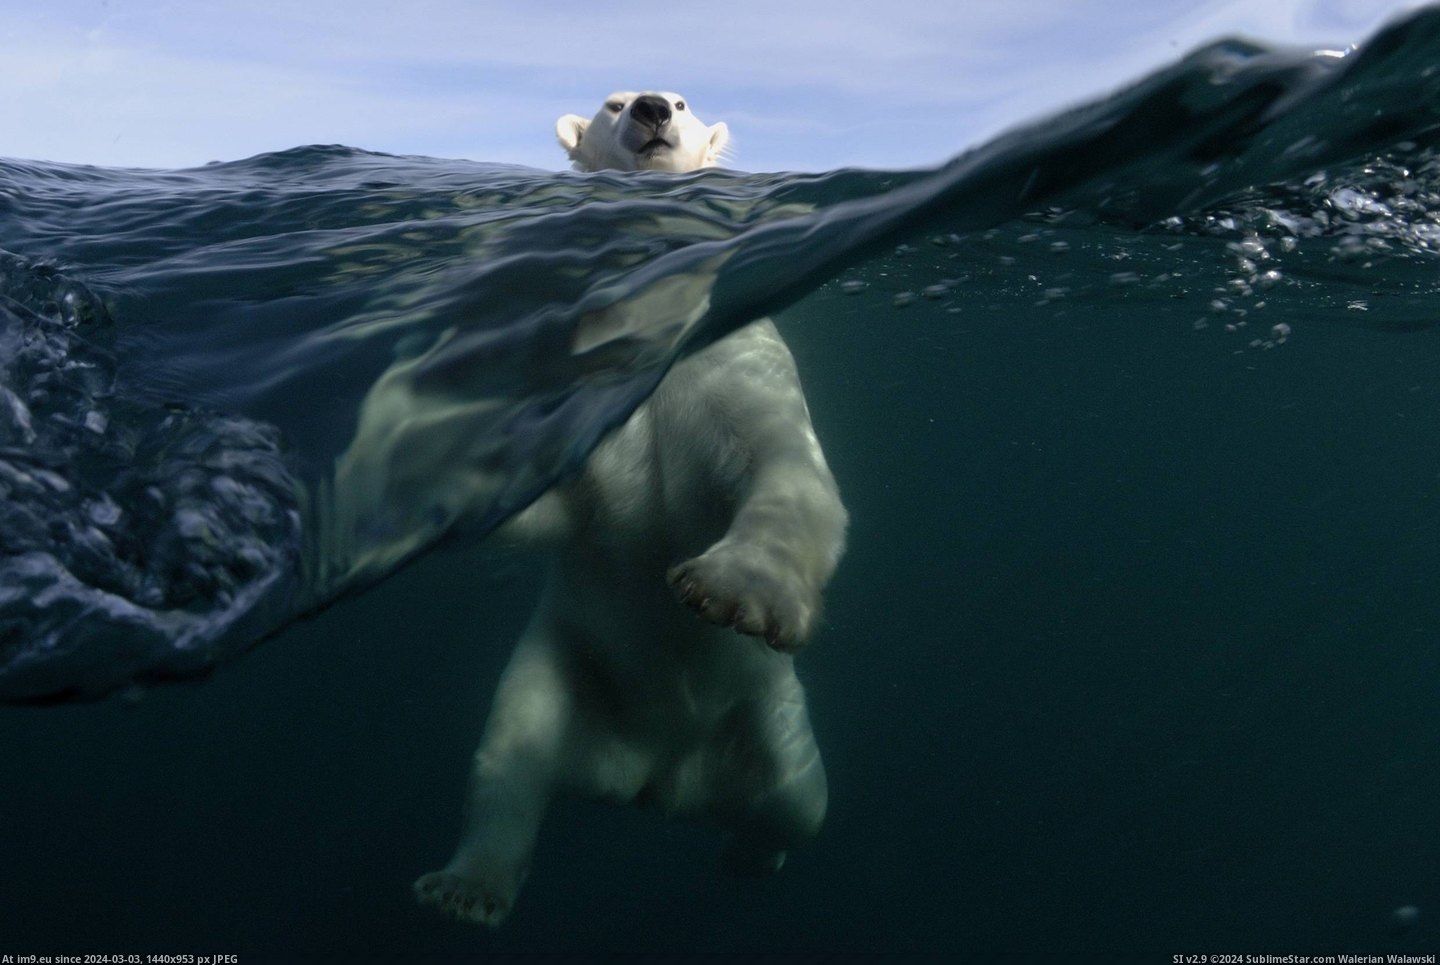 #For #Small #Shot #Got #Polar #Bears #Joe #Bunni #Finally #Spent #Photographer #Boat [Pics] Photographer Joe Bunni spent three days on a small boat looking for polar bears and finally got this shot Pic. (Obraz z album My r/PICS favs))